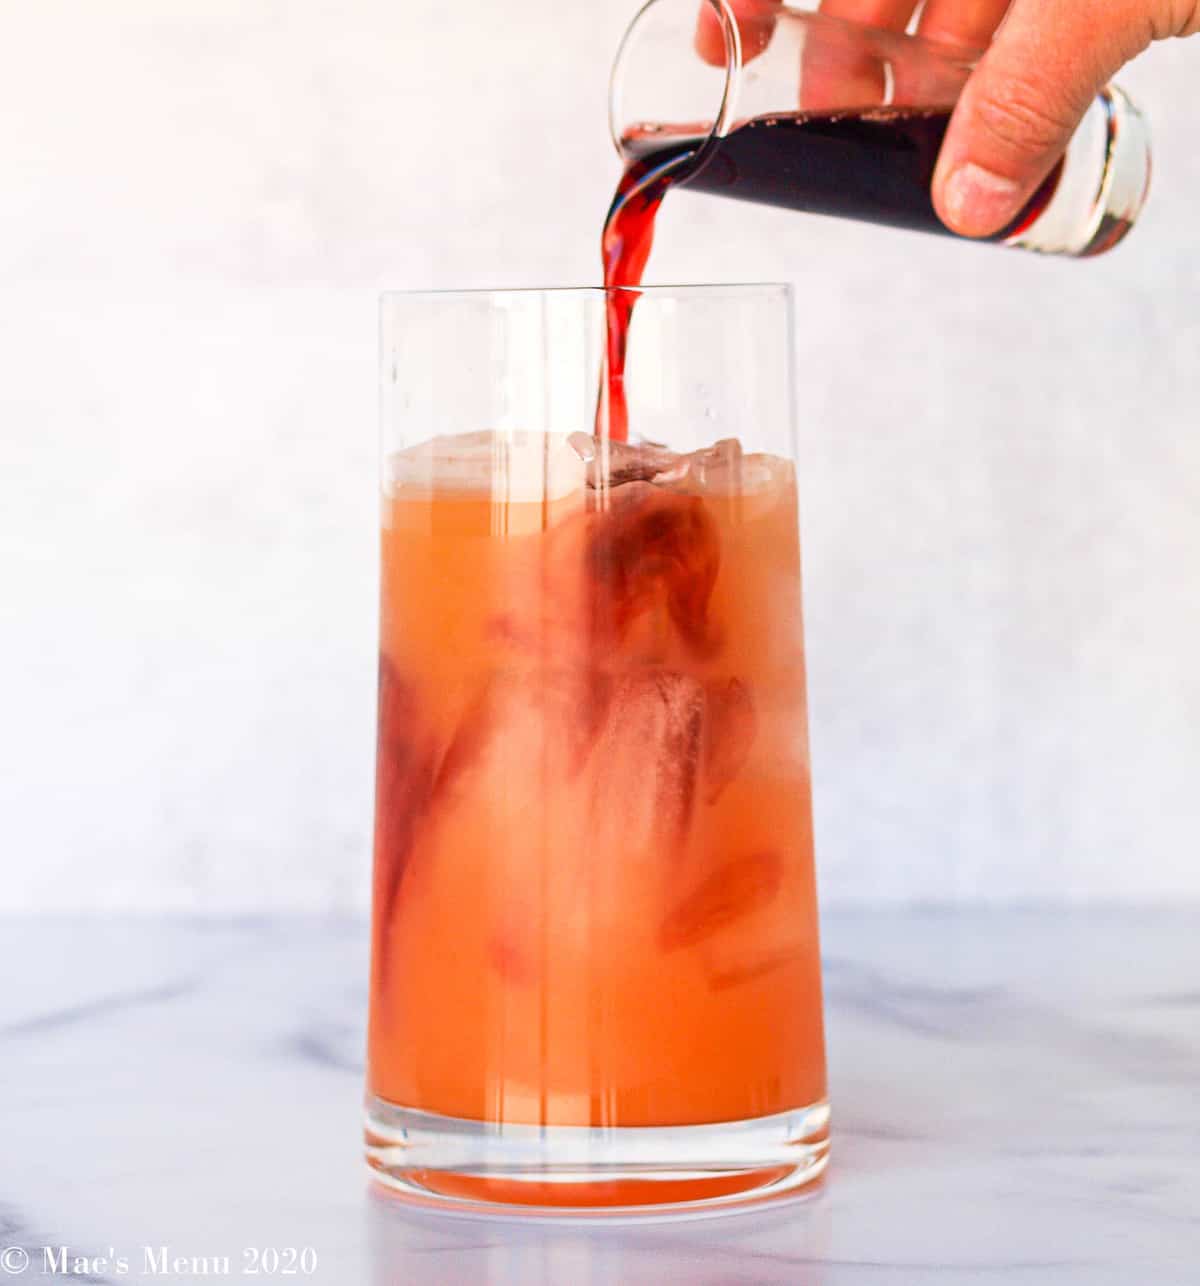 Pouring pomegranate juice into a glass of grapefruit juice